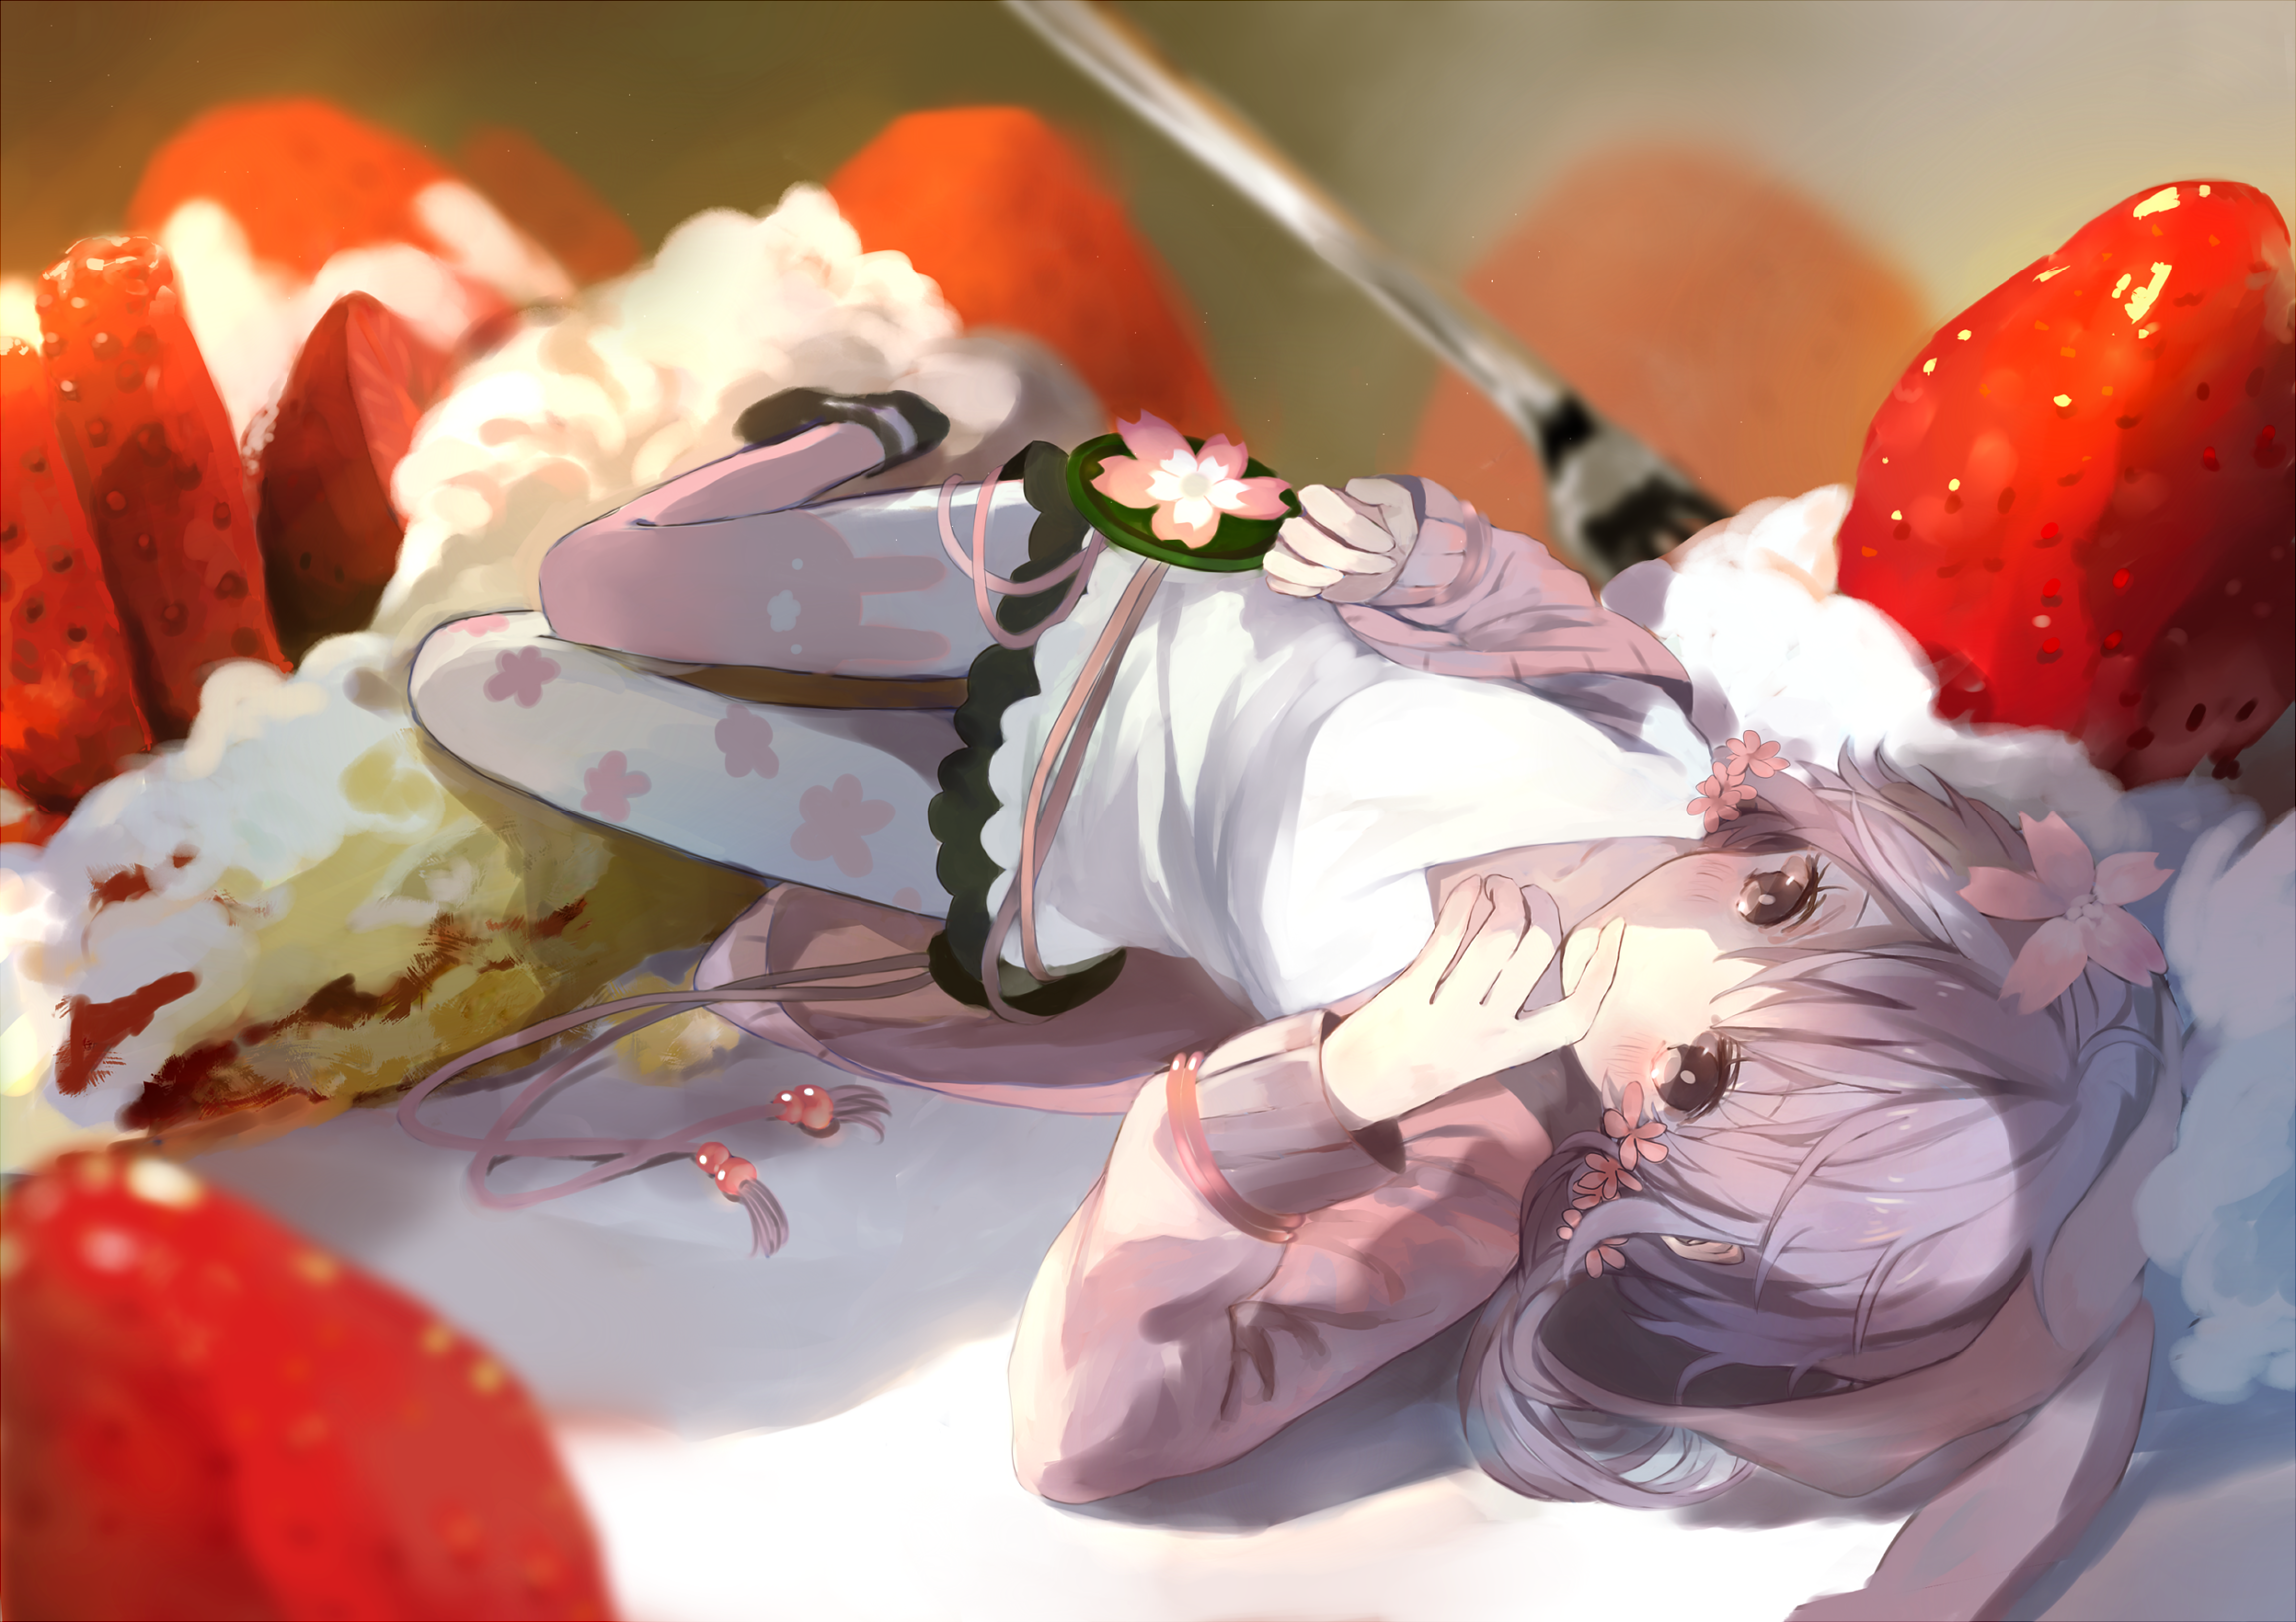 Anime 2300x1625 Yuzuki Yukari Vocaloid anime girls anime colorful flower in hair knees together lying down food fruit strawberries